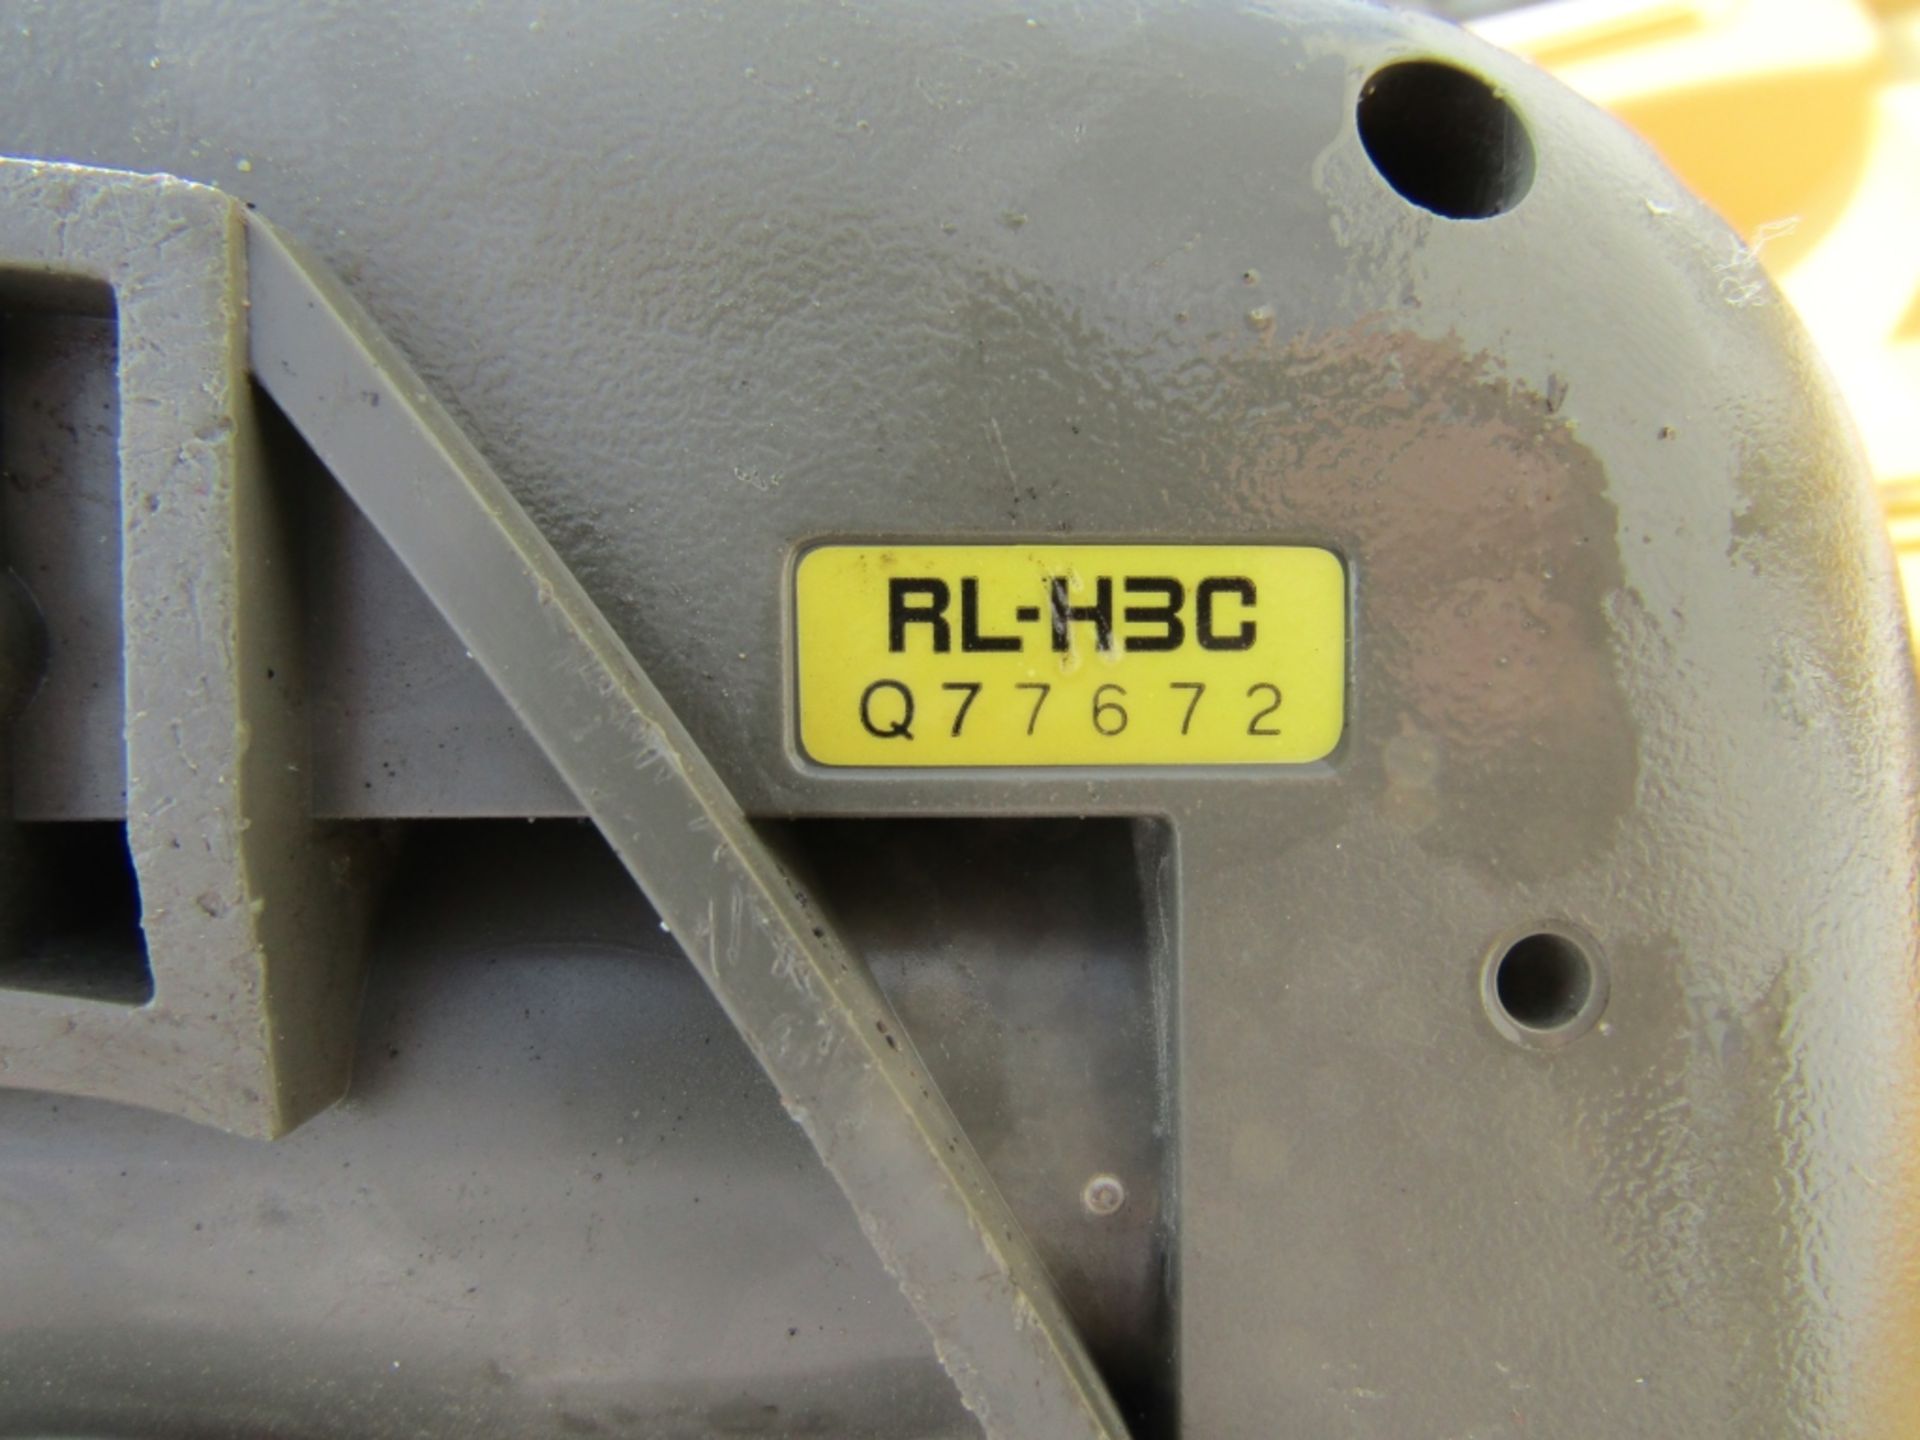 Topcon RL-H3C Laser, Serial # Q77672, - Image 2 of 4